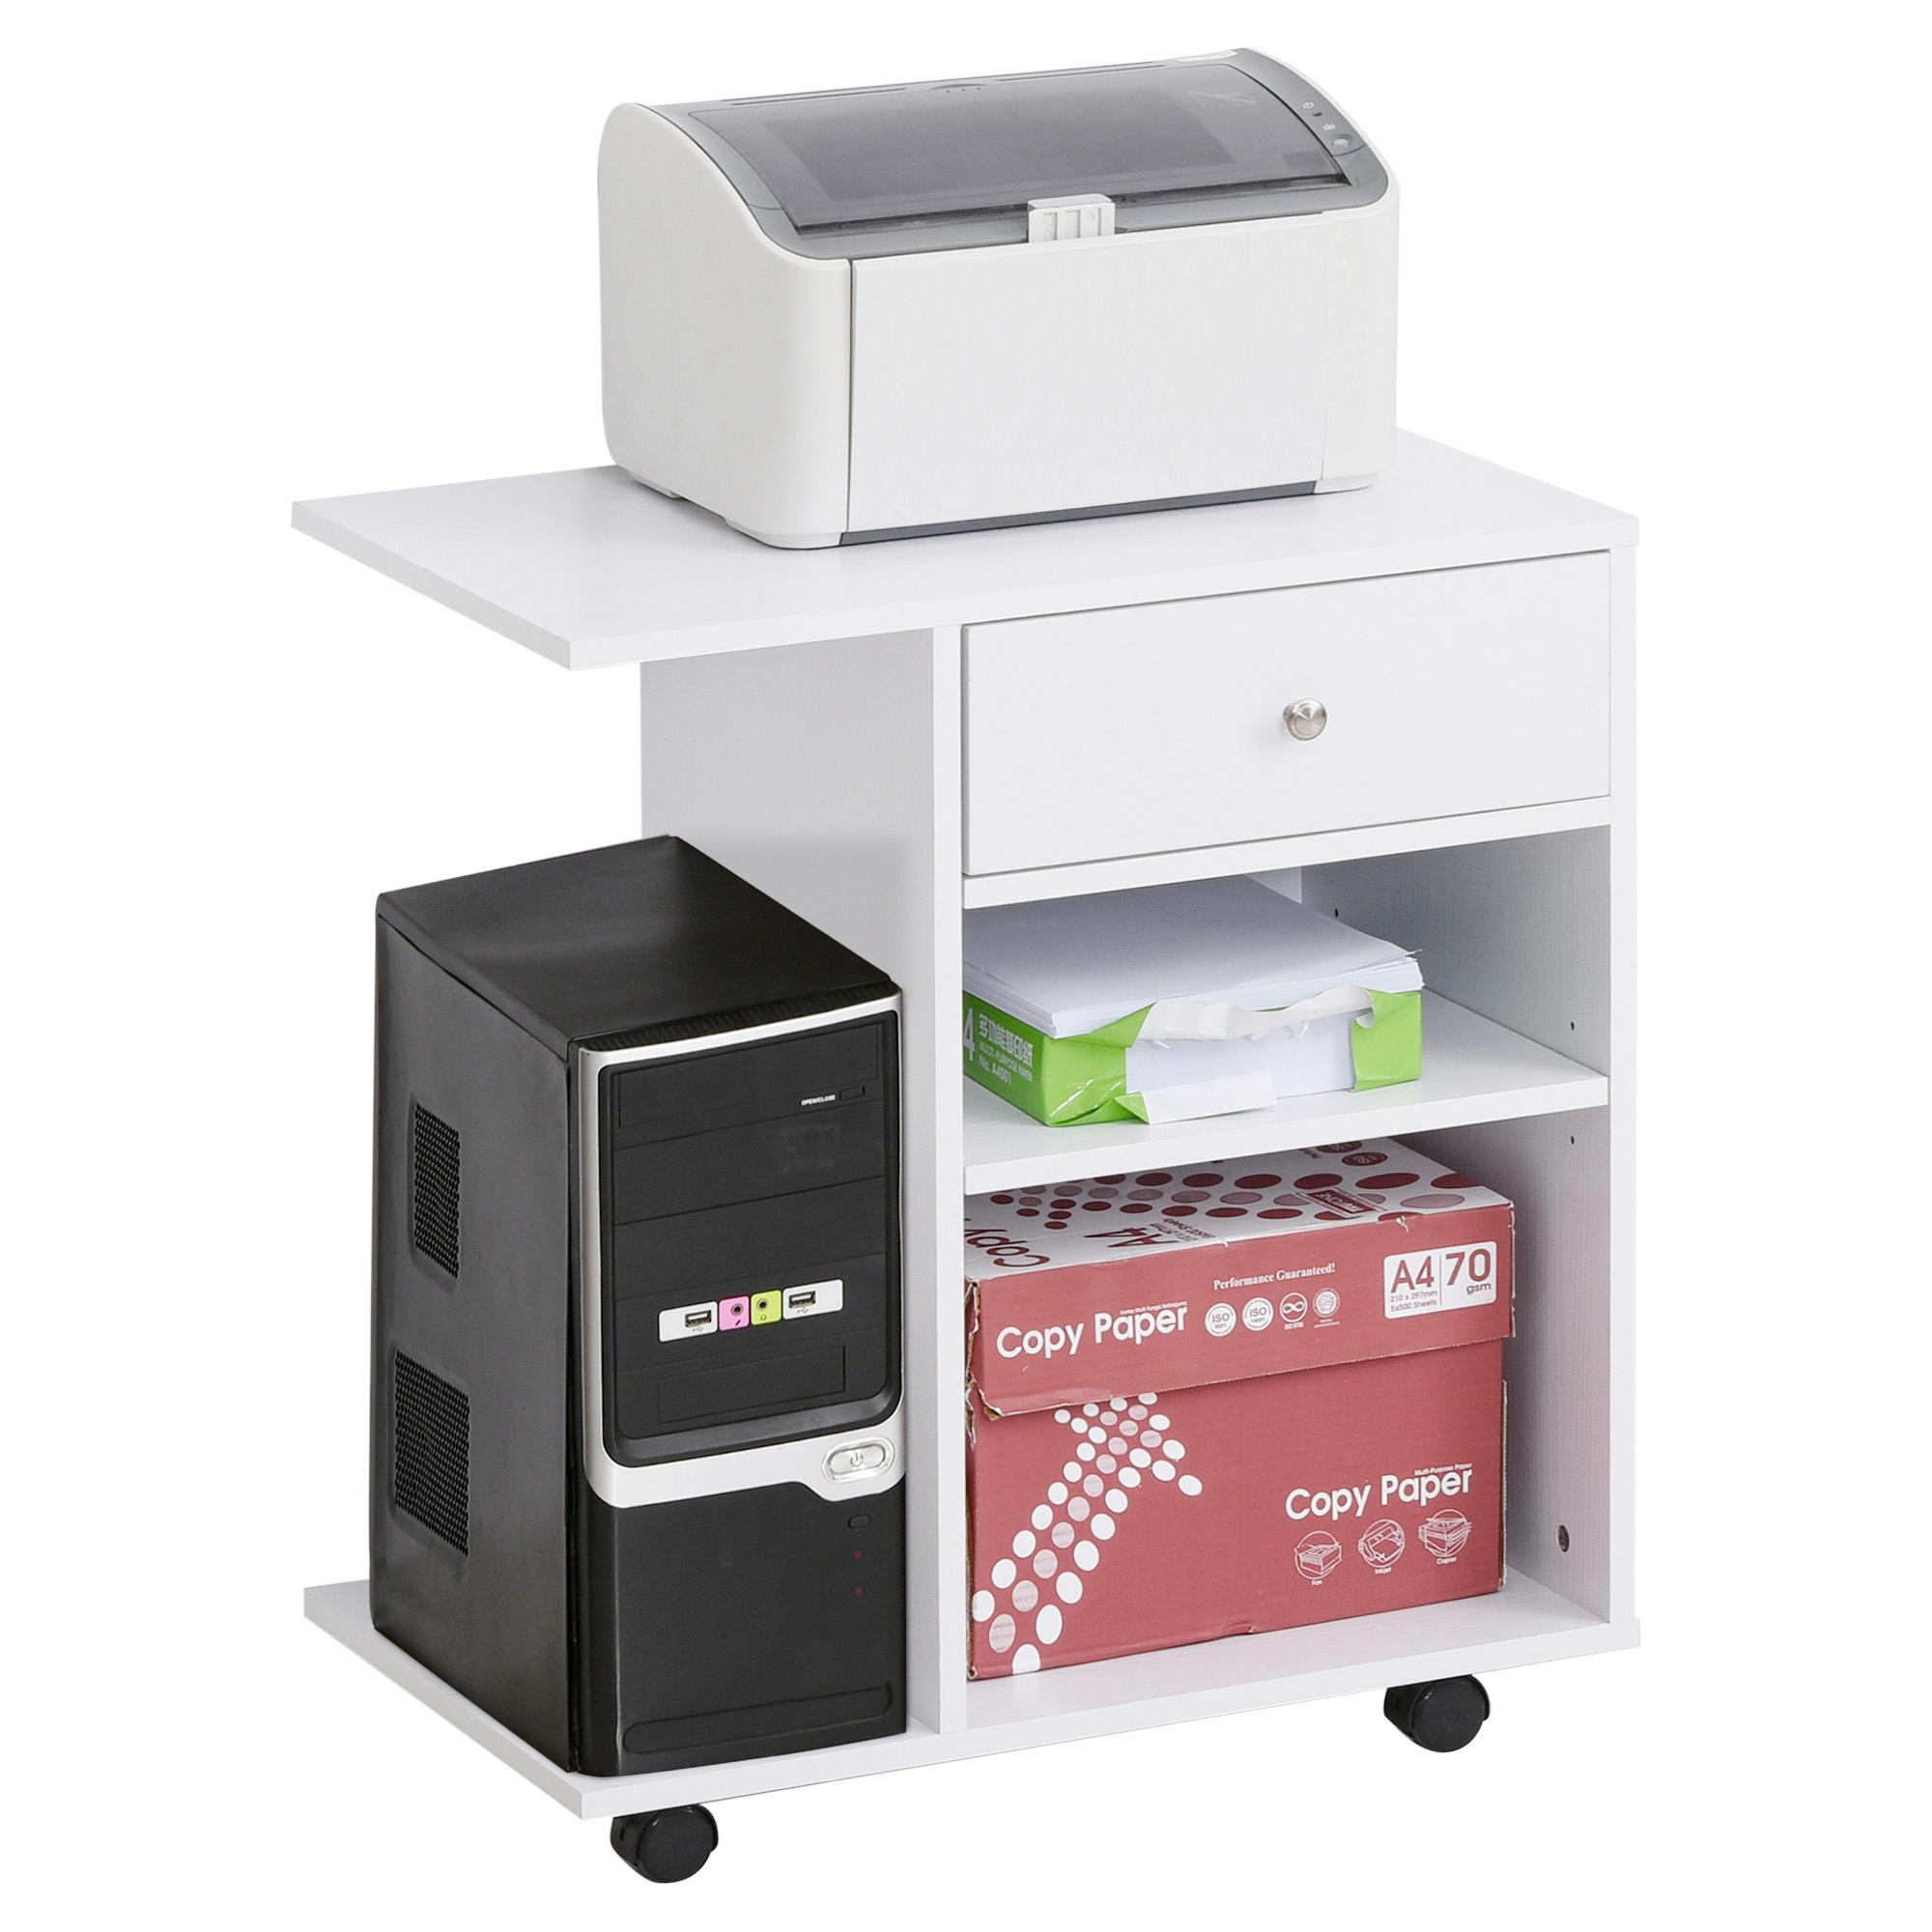 Support d'imprimante organiseur bureau caisson 2 niches tiroir espace CPU + grand plateau panneaux particules blanc